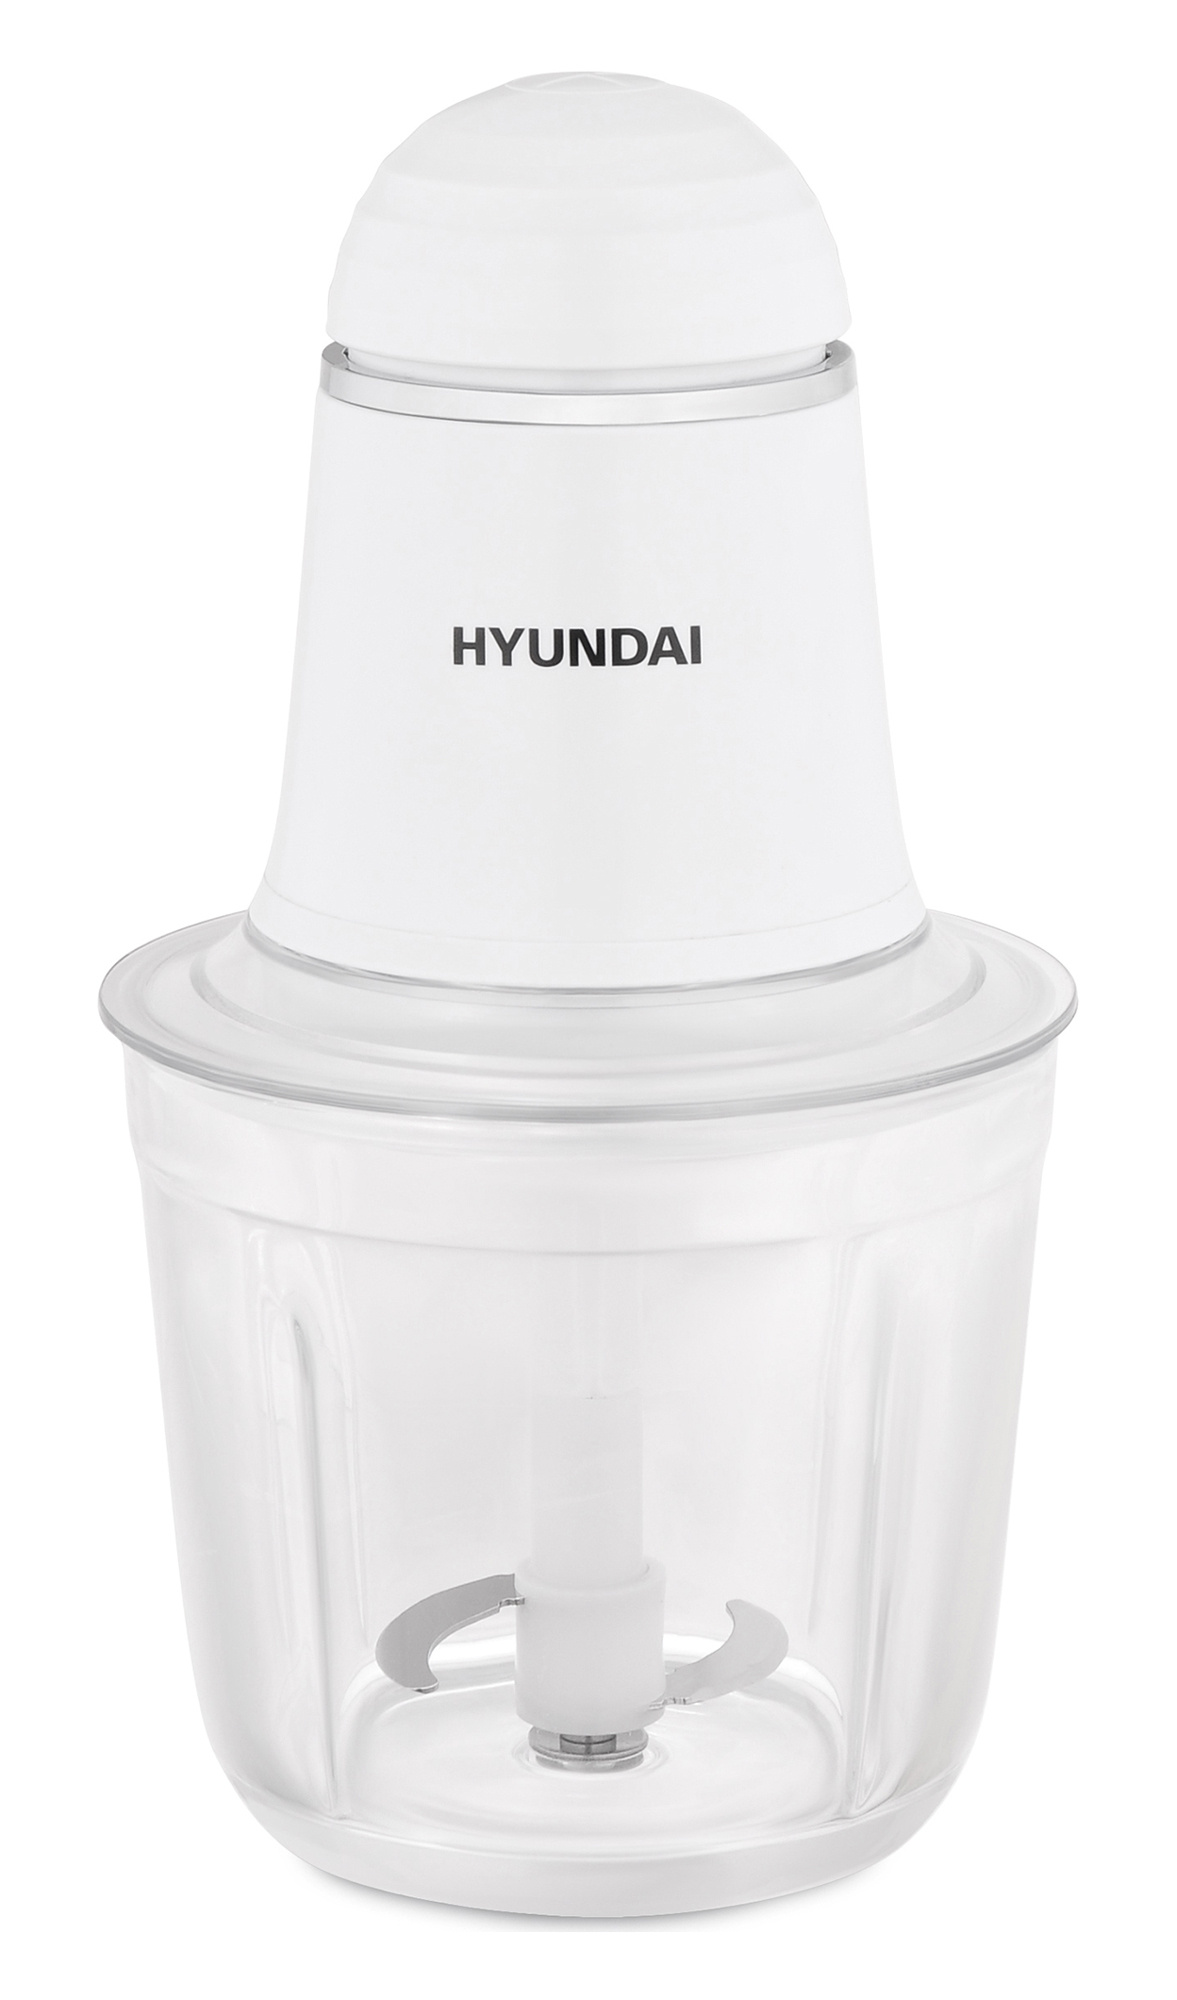 Измельчитель Hyundai HYC-P2105 White измельчитель girmi tr01 white orange